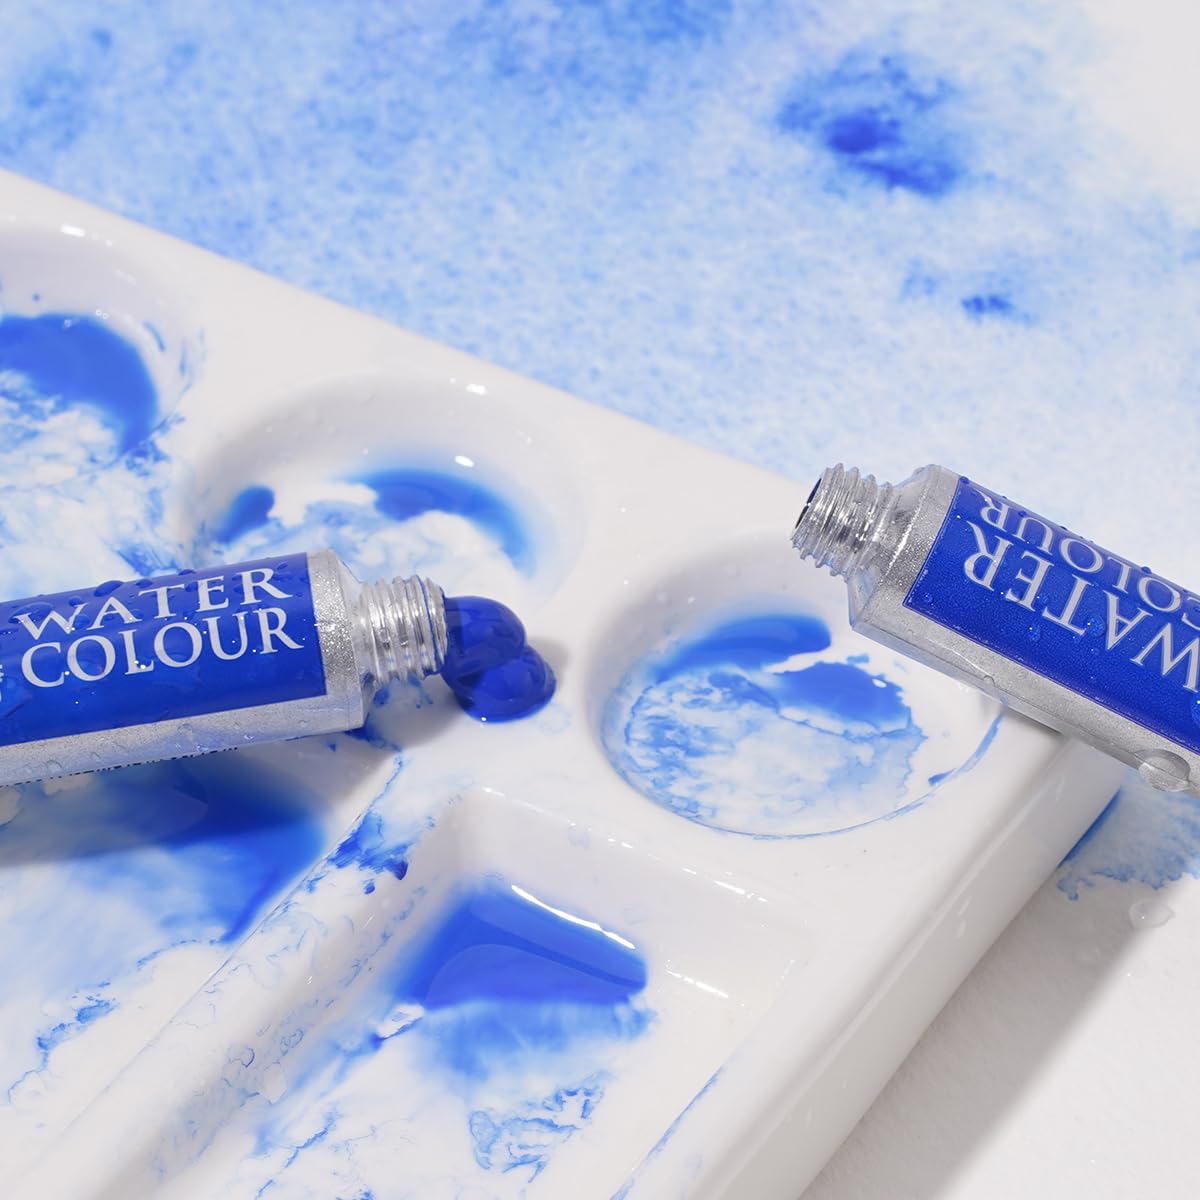 Meiliang Watercolor Paint Set 48 Vivid Colors Includes12 Metallic Glitter  Solid